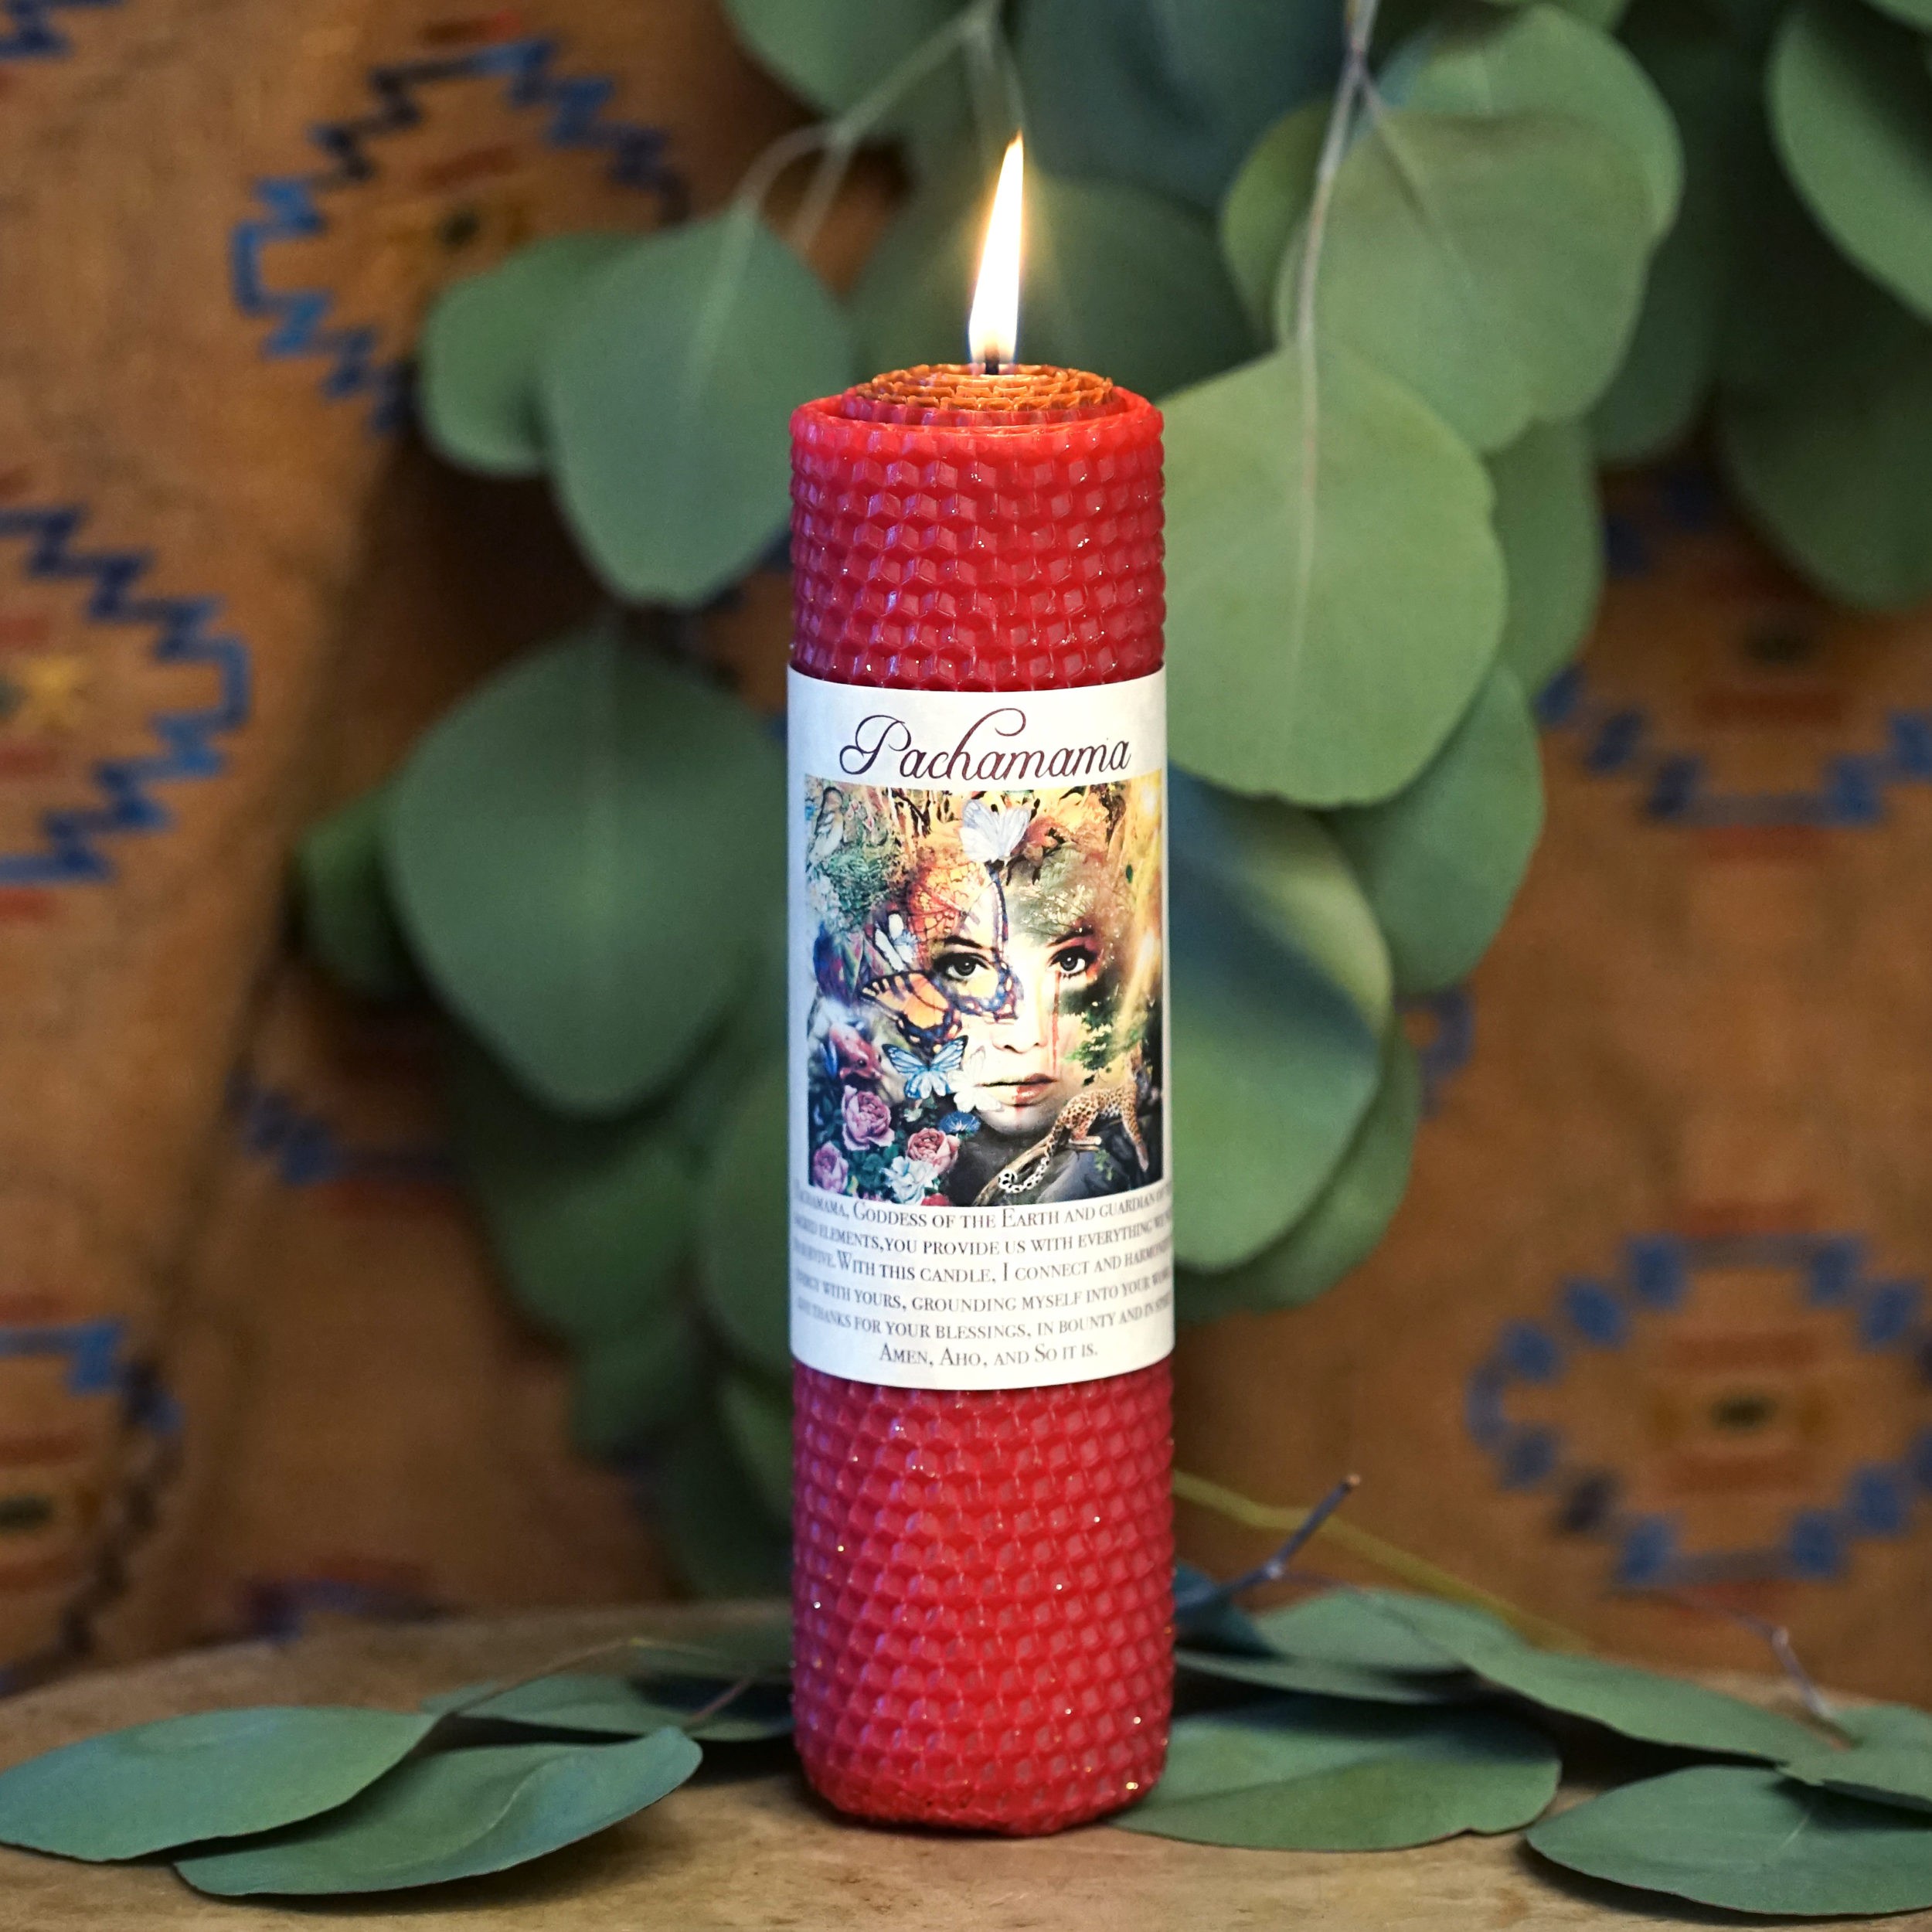 Pachamama candle